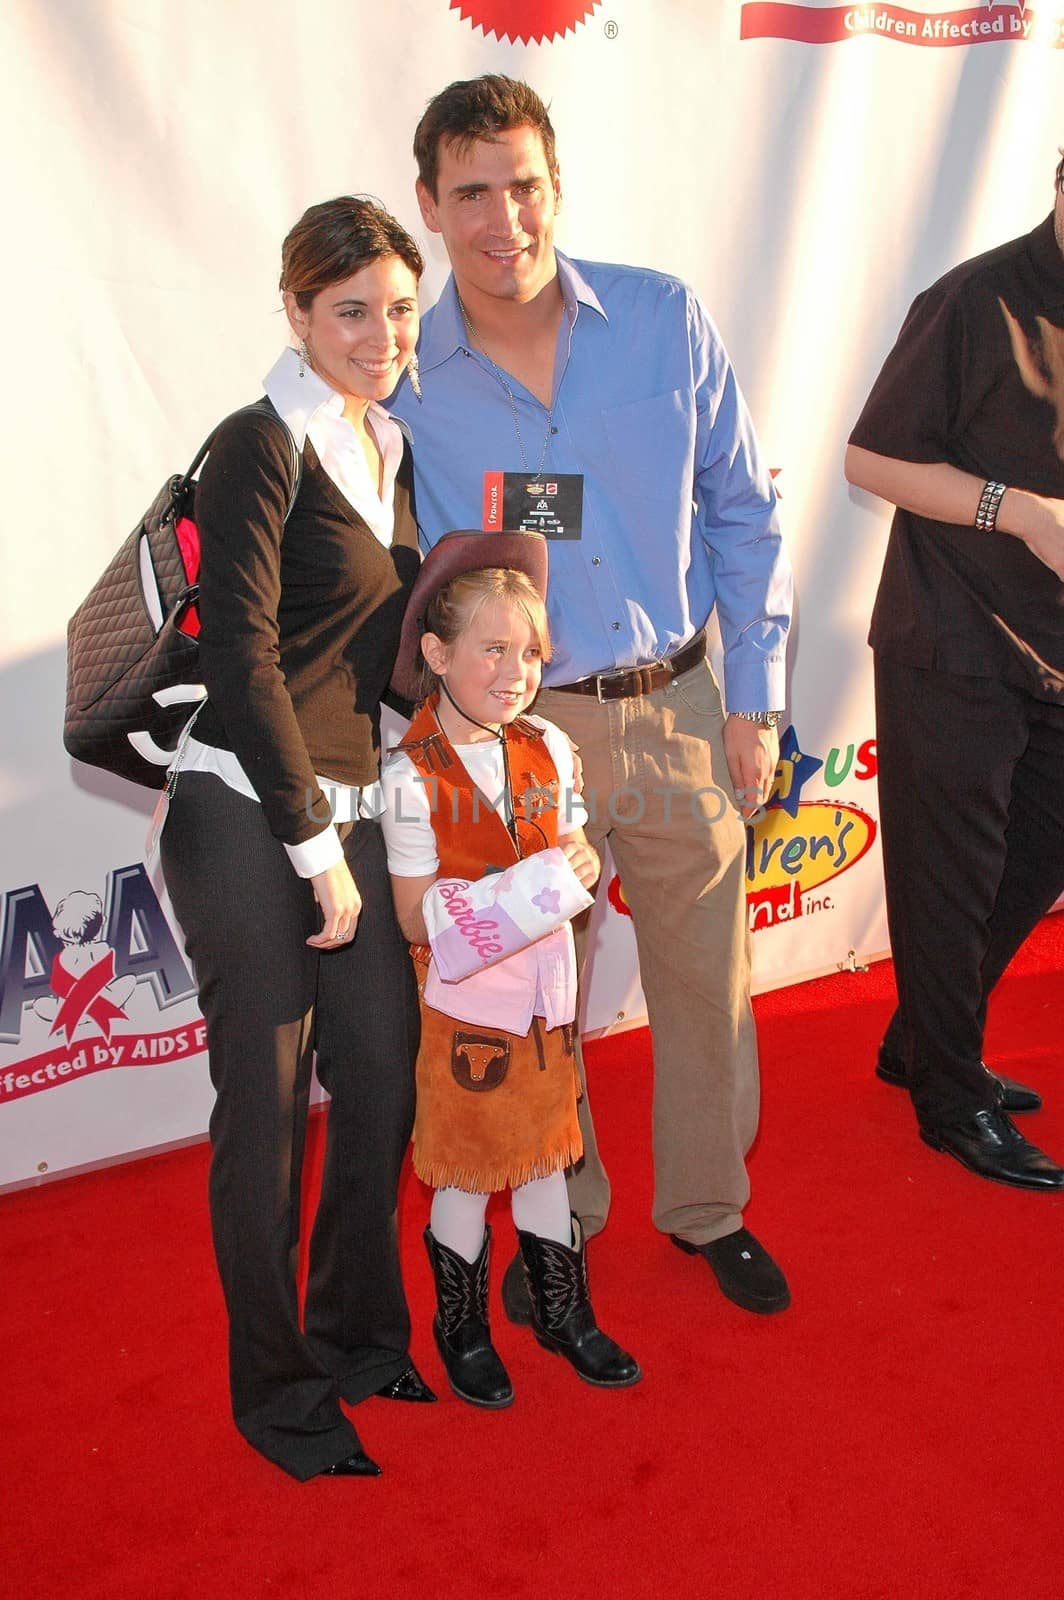 Jamie Lynn DiScala at the 2004 Dream Halloween Fundraiser For Children Affected by AIDS Foundation, Barker Hangar, Santa Monica, CA 10-30-04